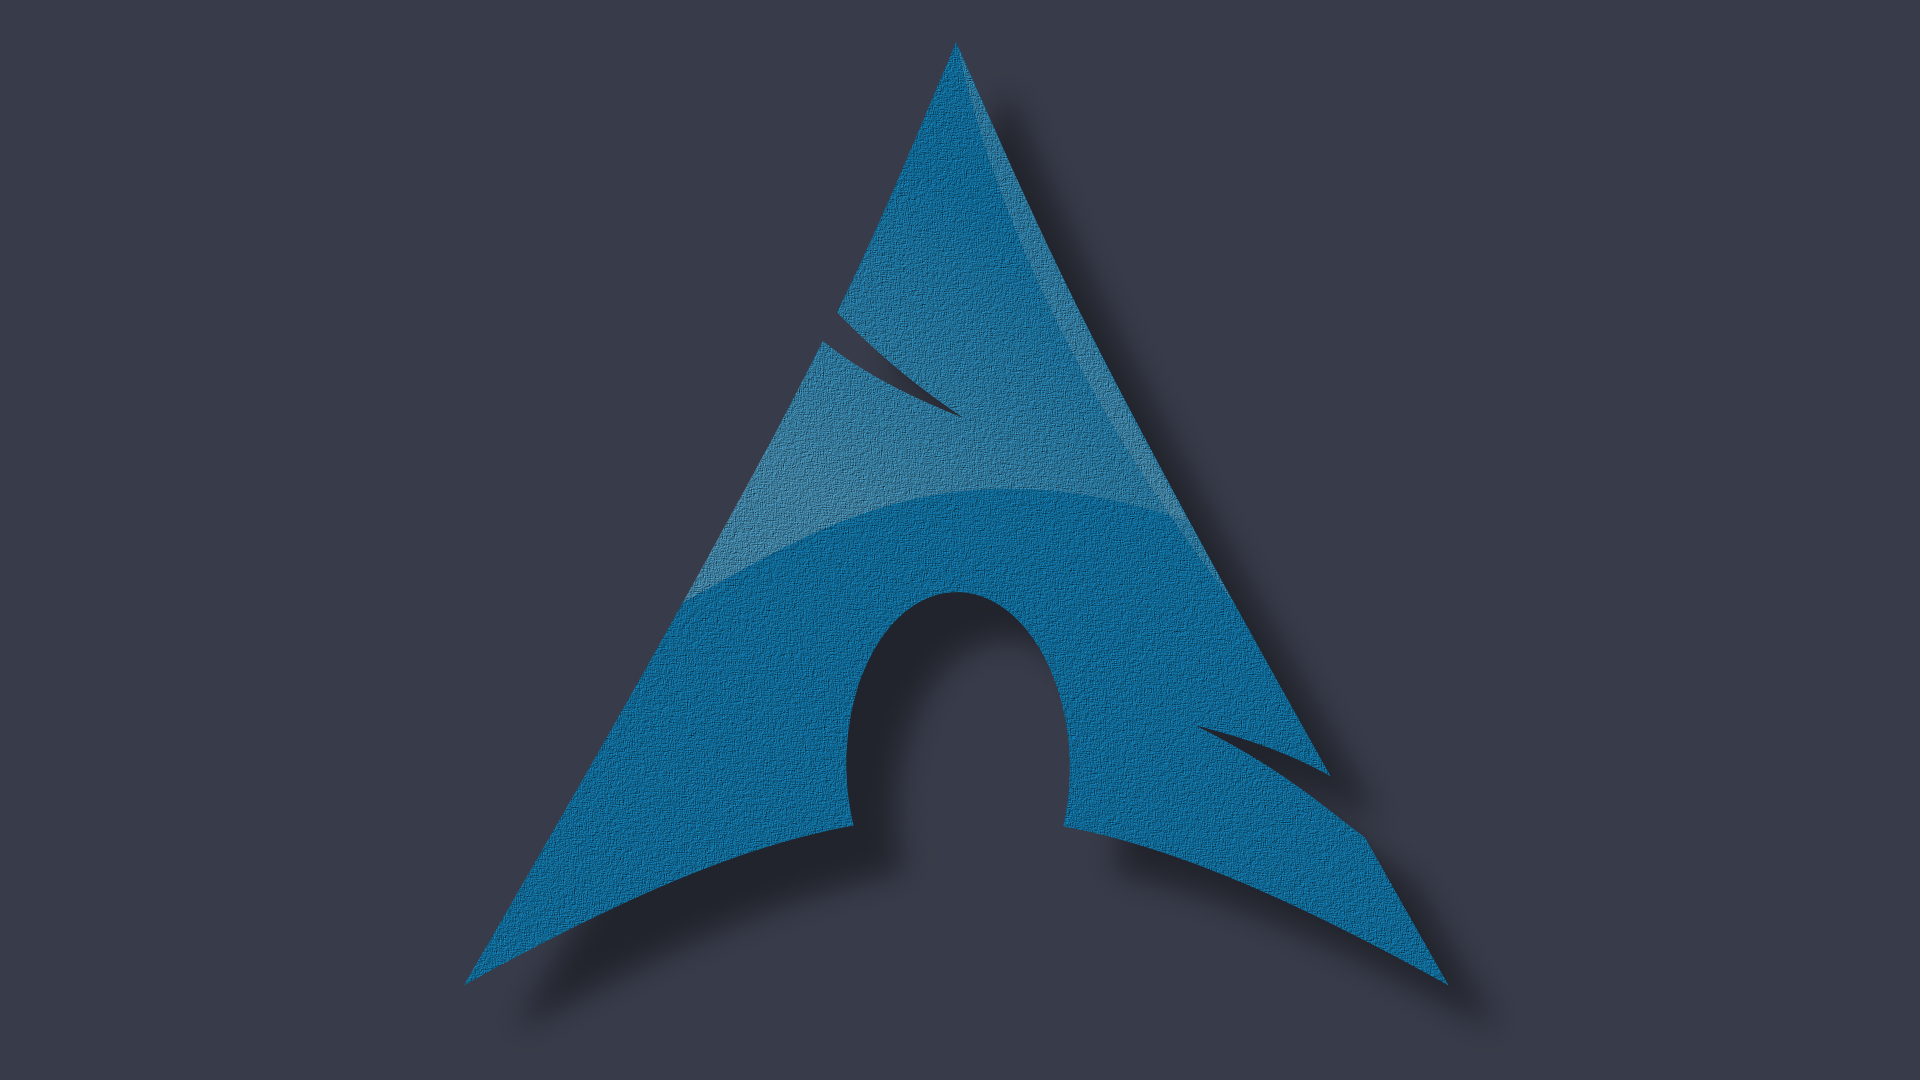 arch linux wallpaper,blue,azure,logo,triangle,design